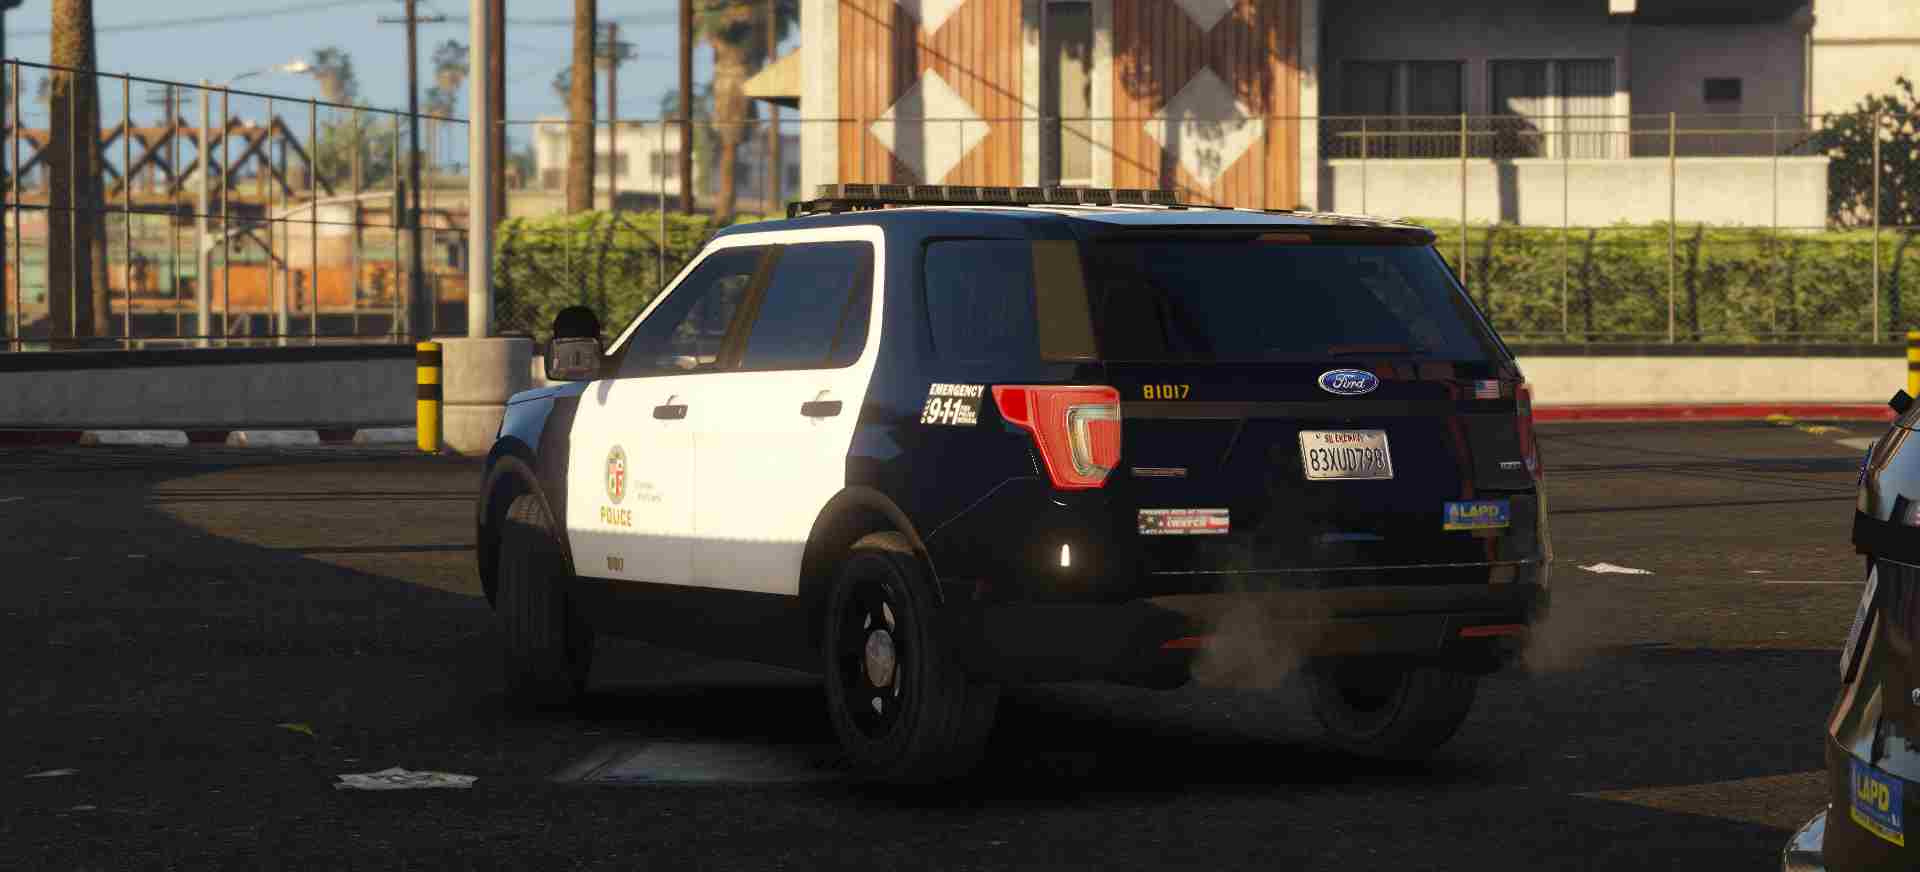 2016 Ford Police Interceptor Utility Lspdlapd Els Gta5